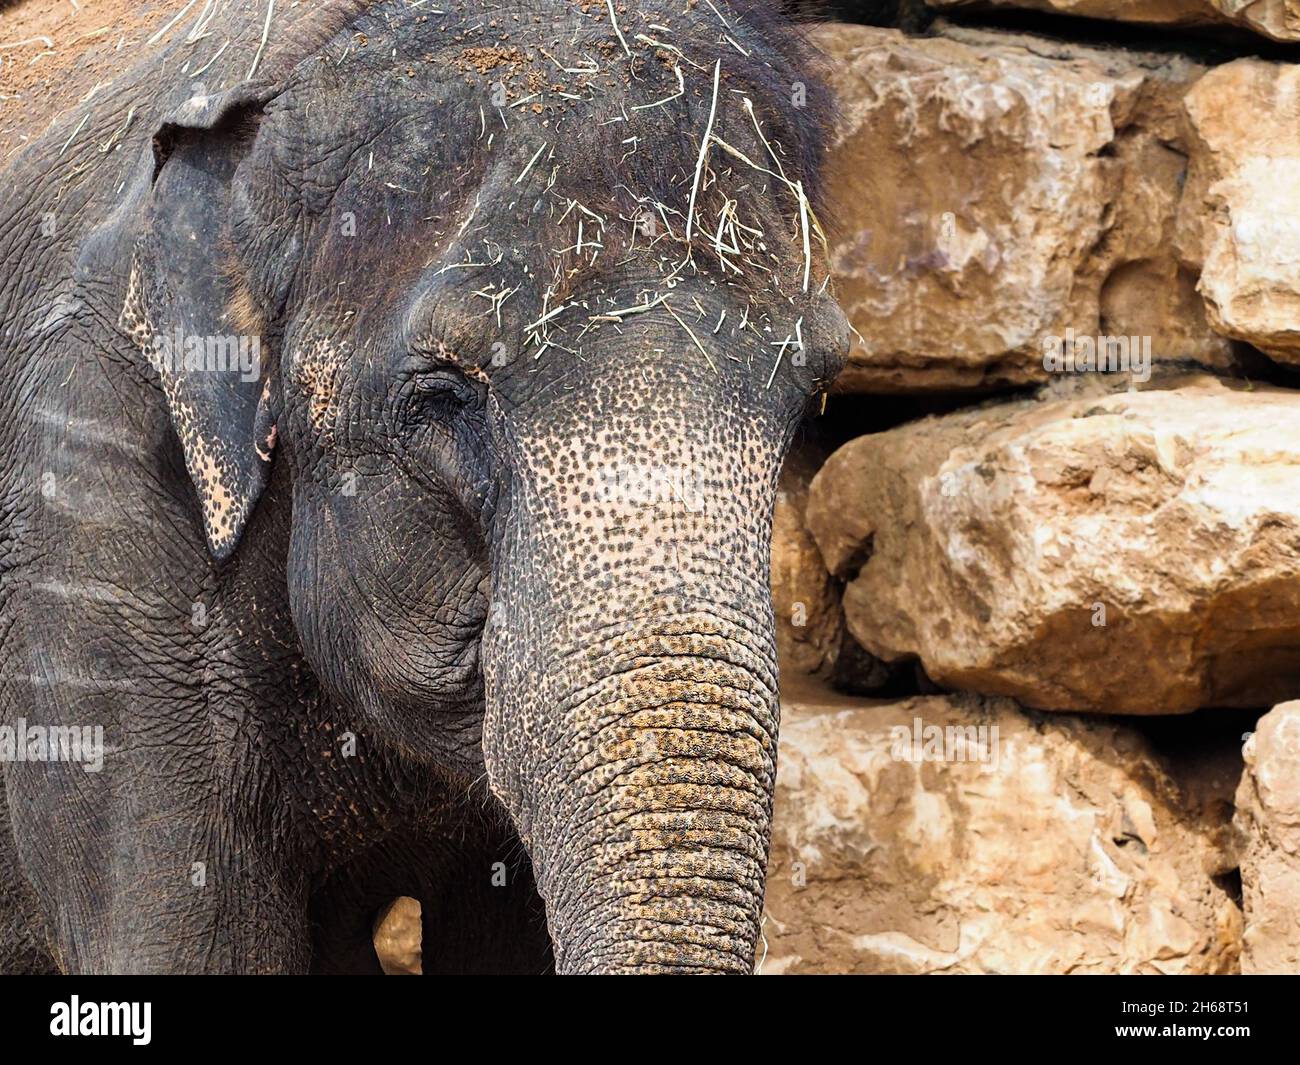 Close-up portrait of an elephant. Stock Photo